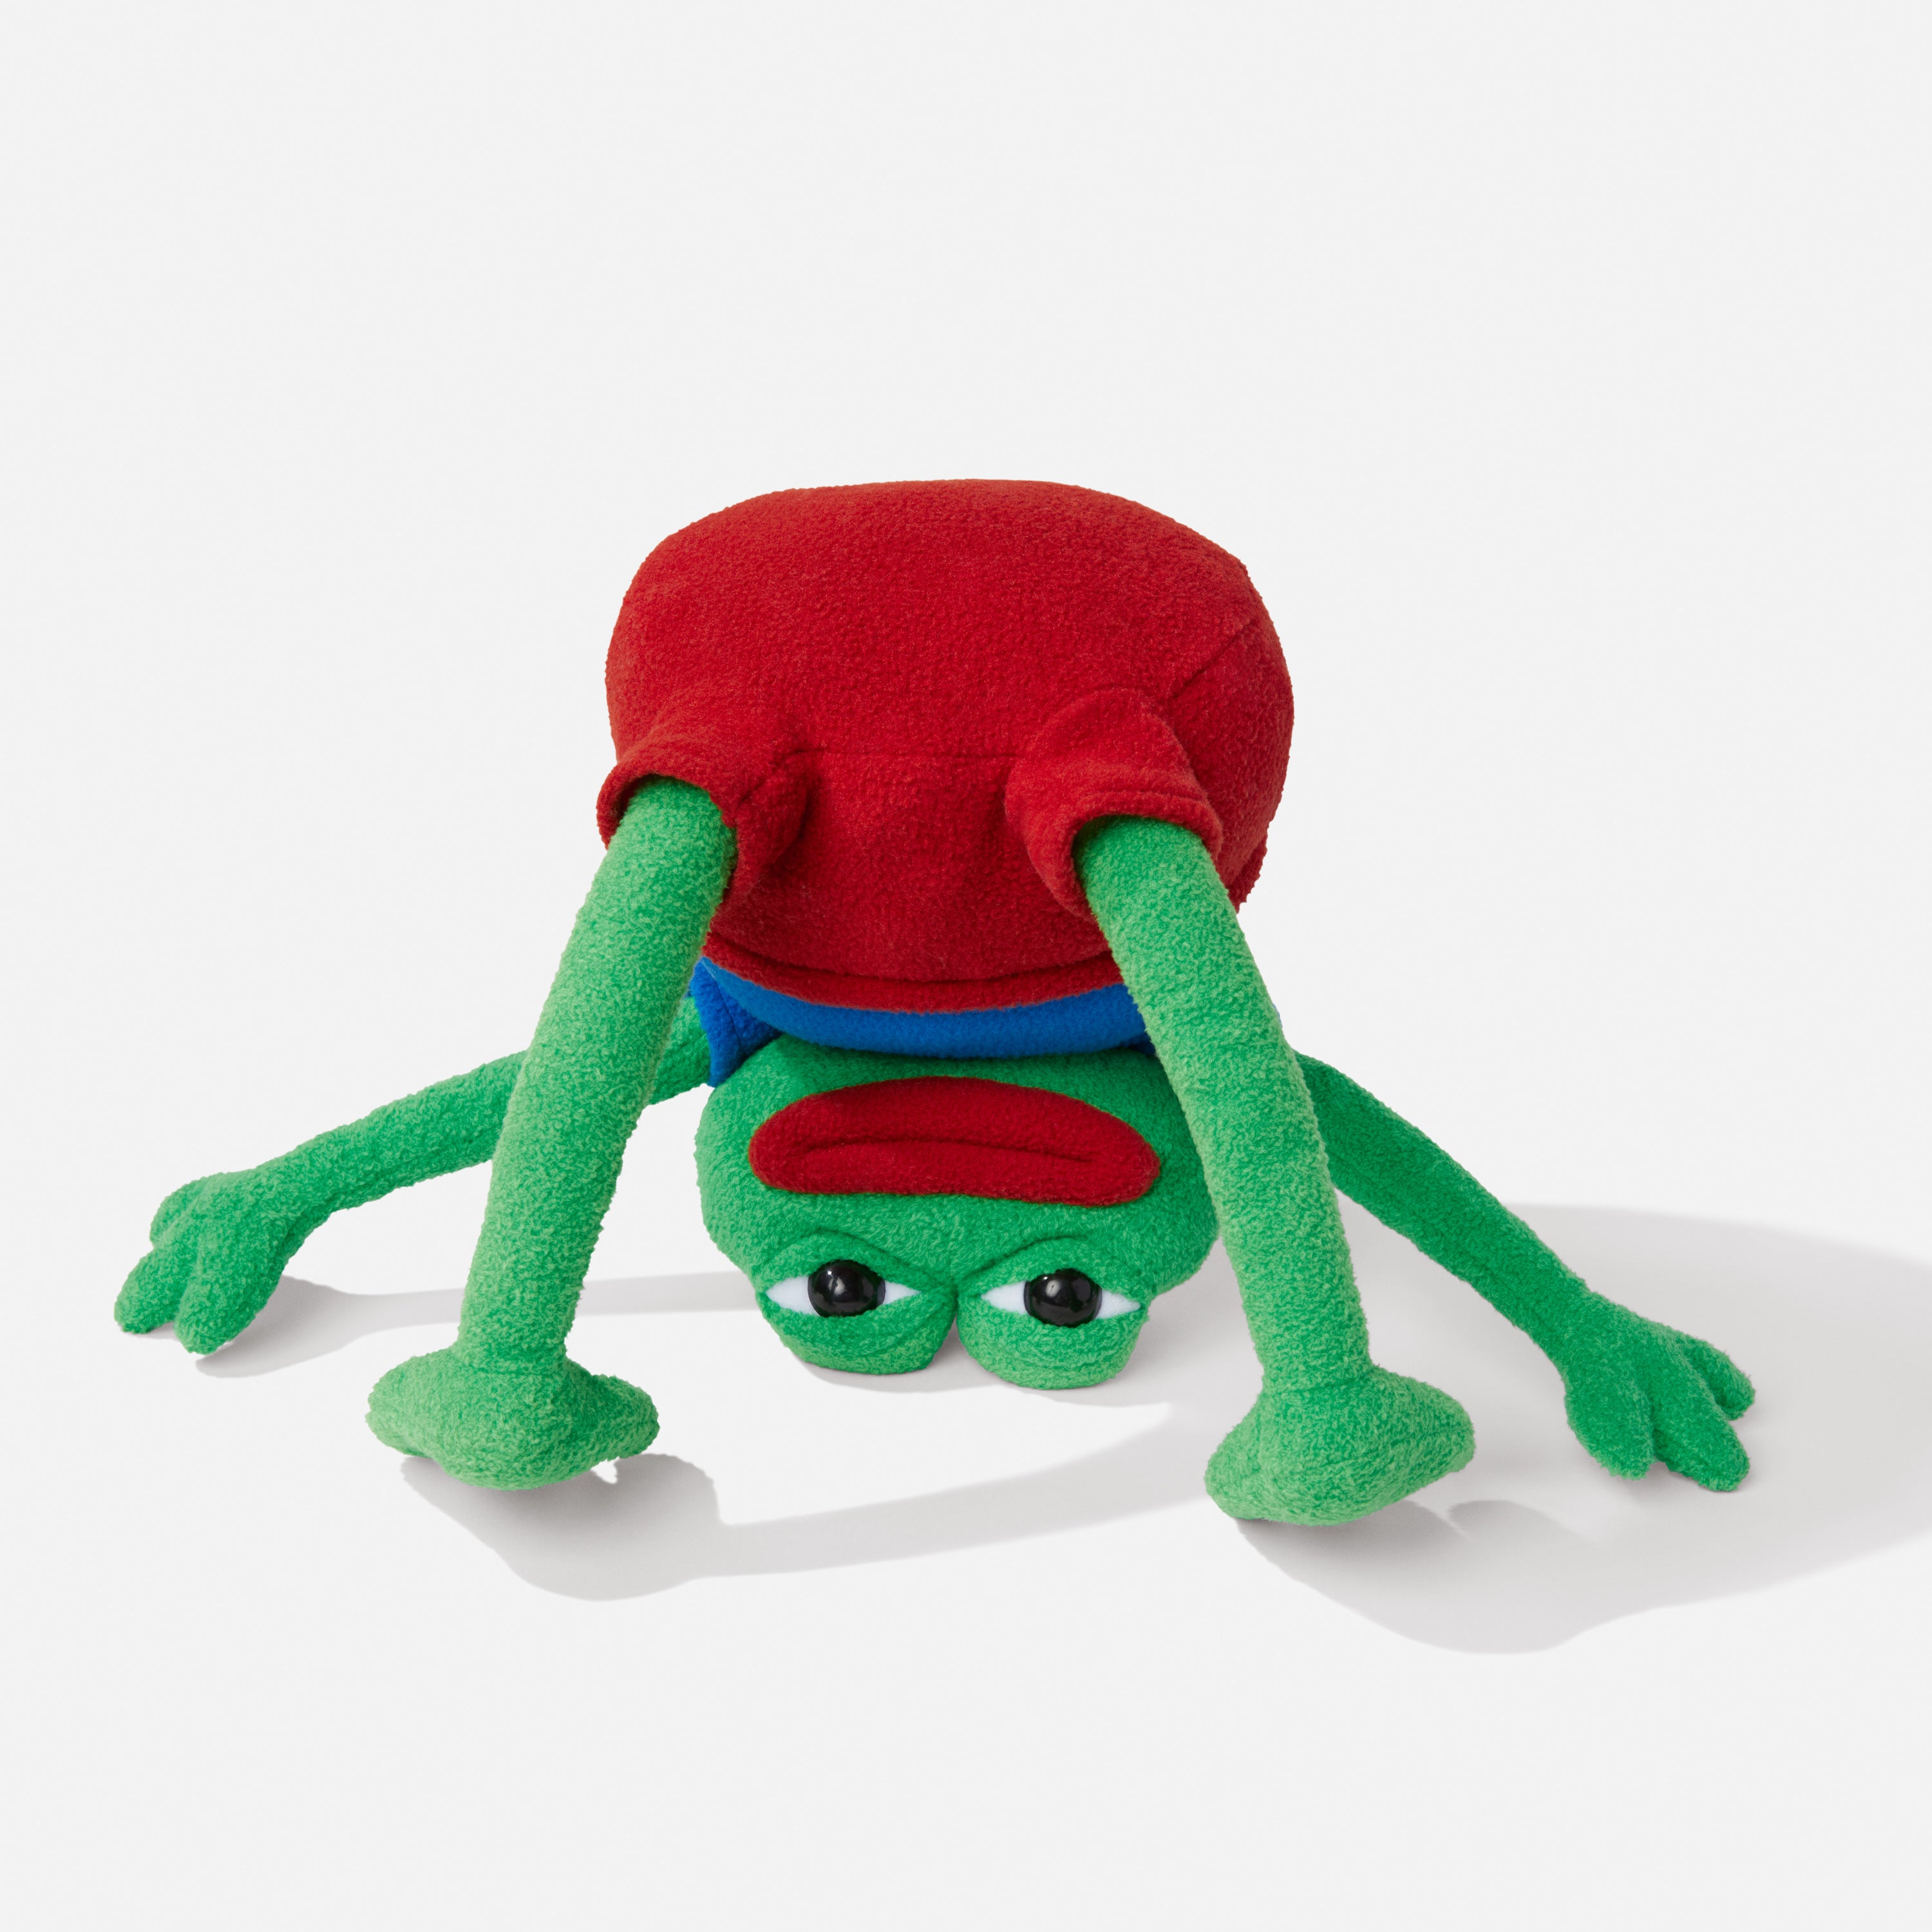 Pepe The Frog – Uncute